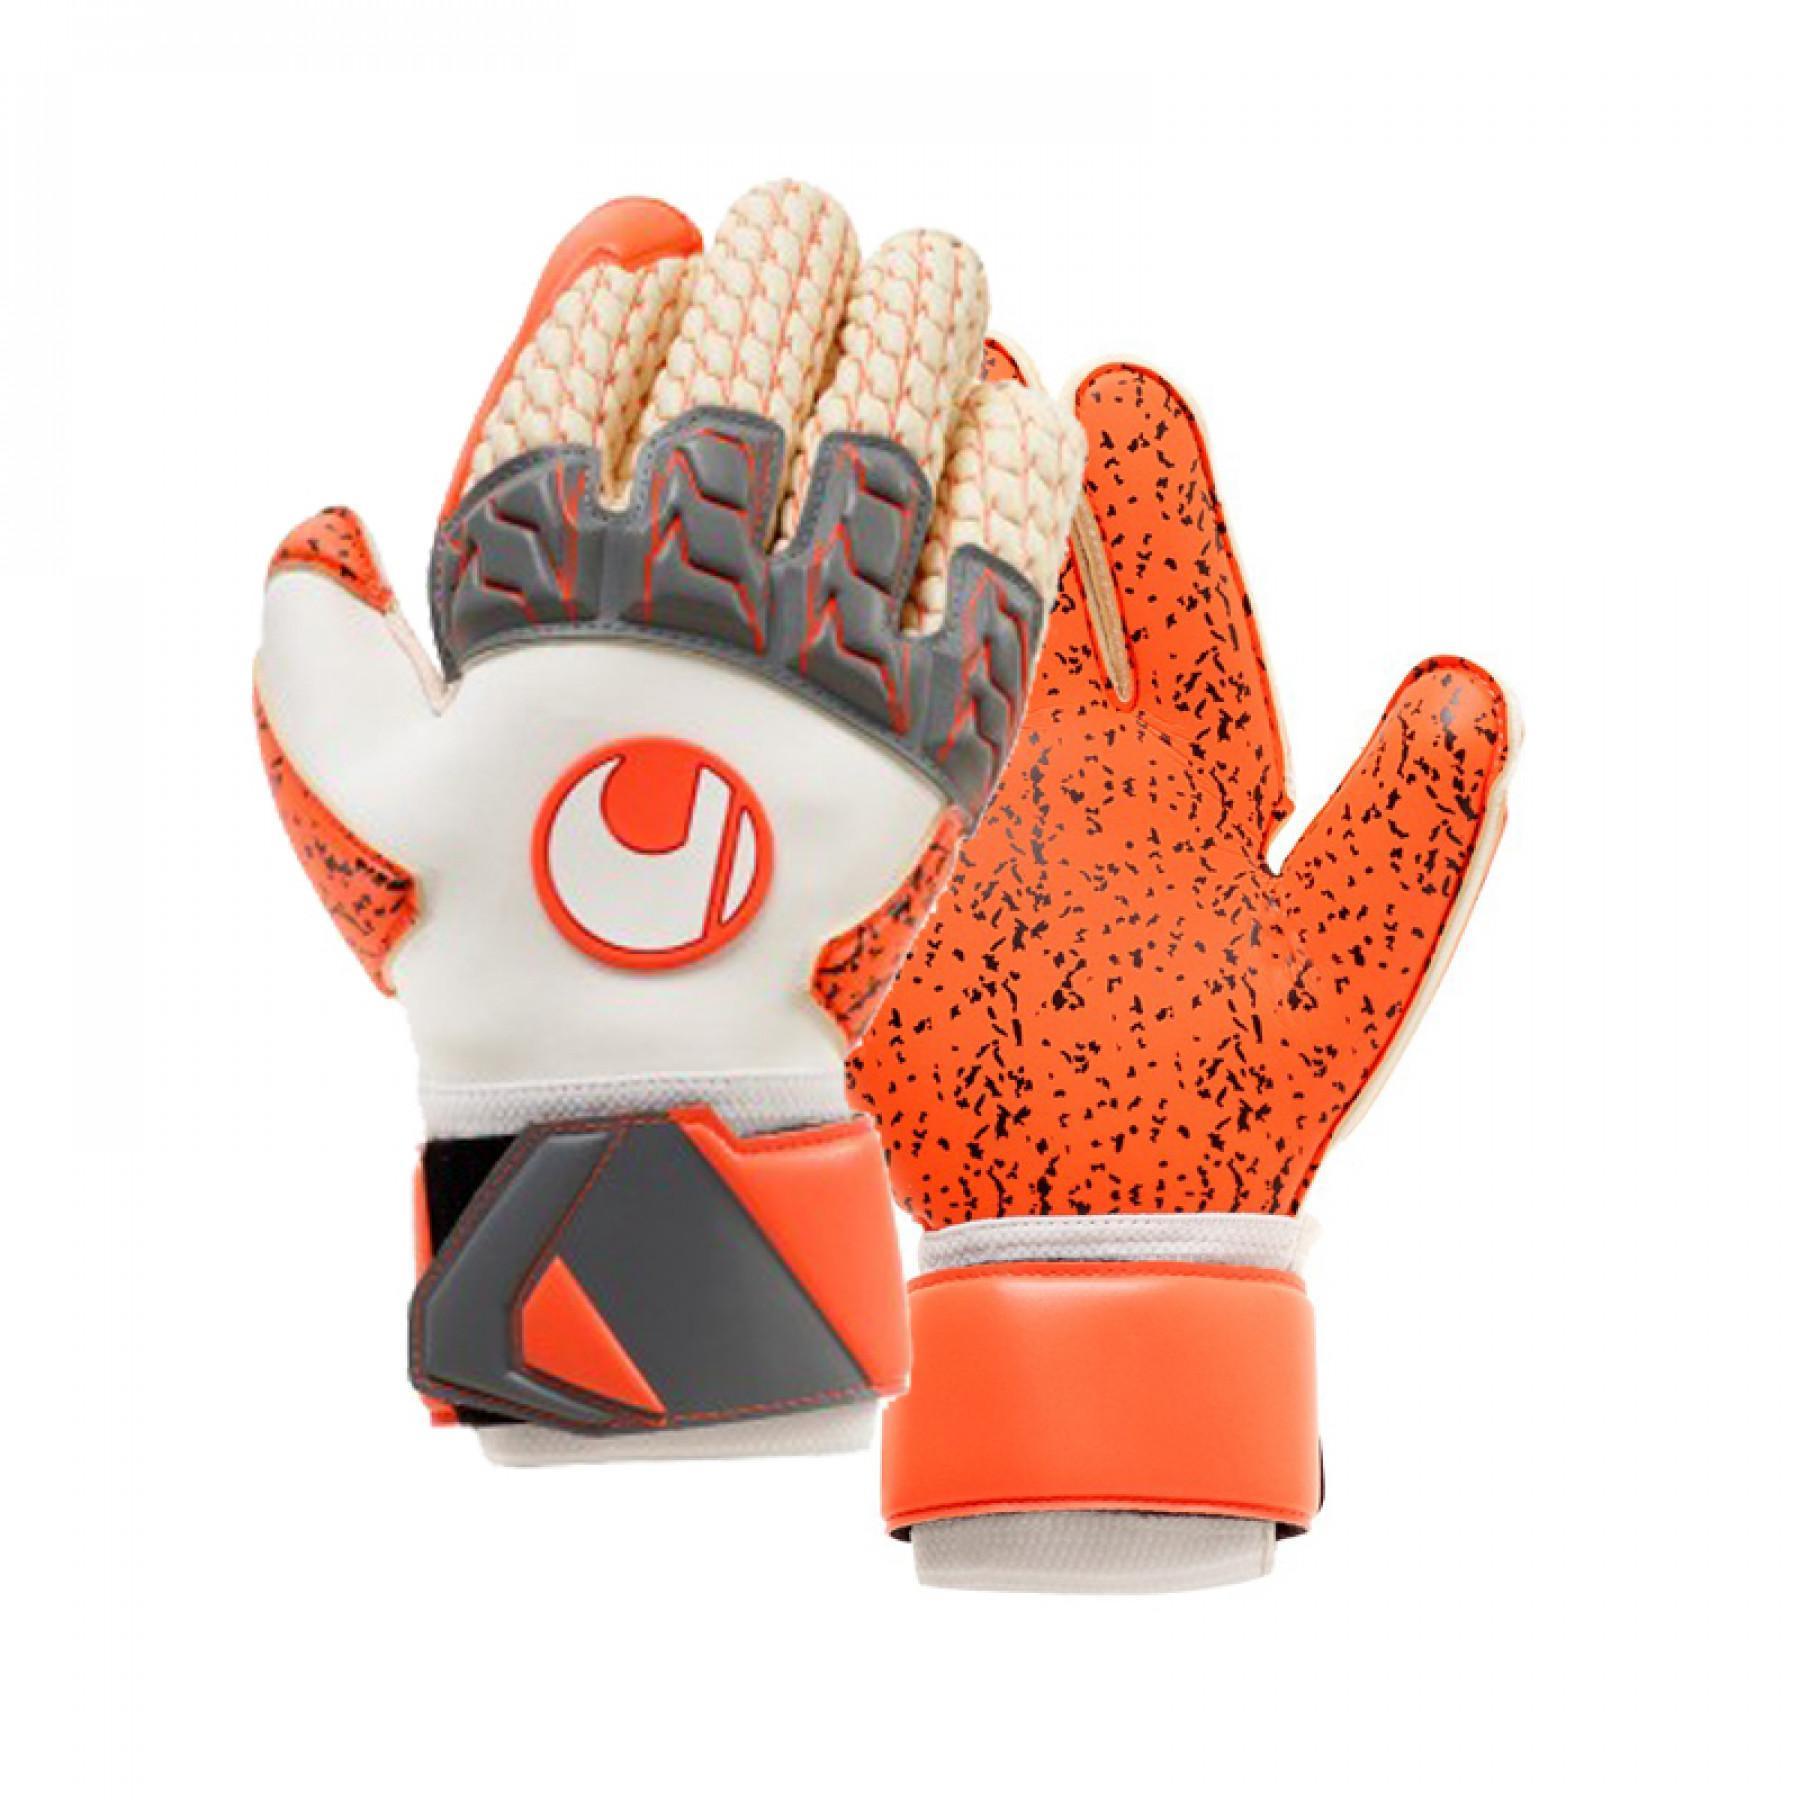 Goalkeeper gloves Uhlsport Aerored Supergrip Lloris